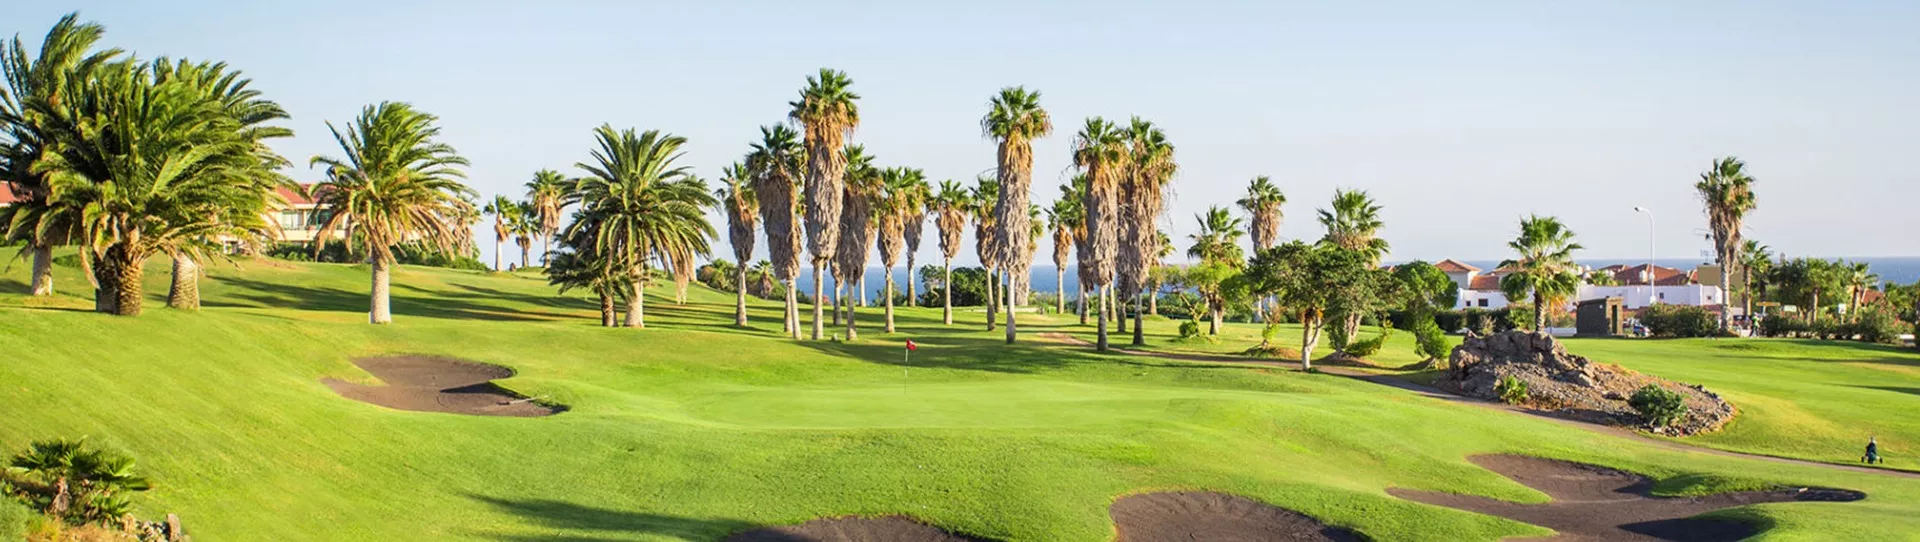 Spain golf holidays - Golf del Sur 5 Round Pack - Photo 1